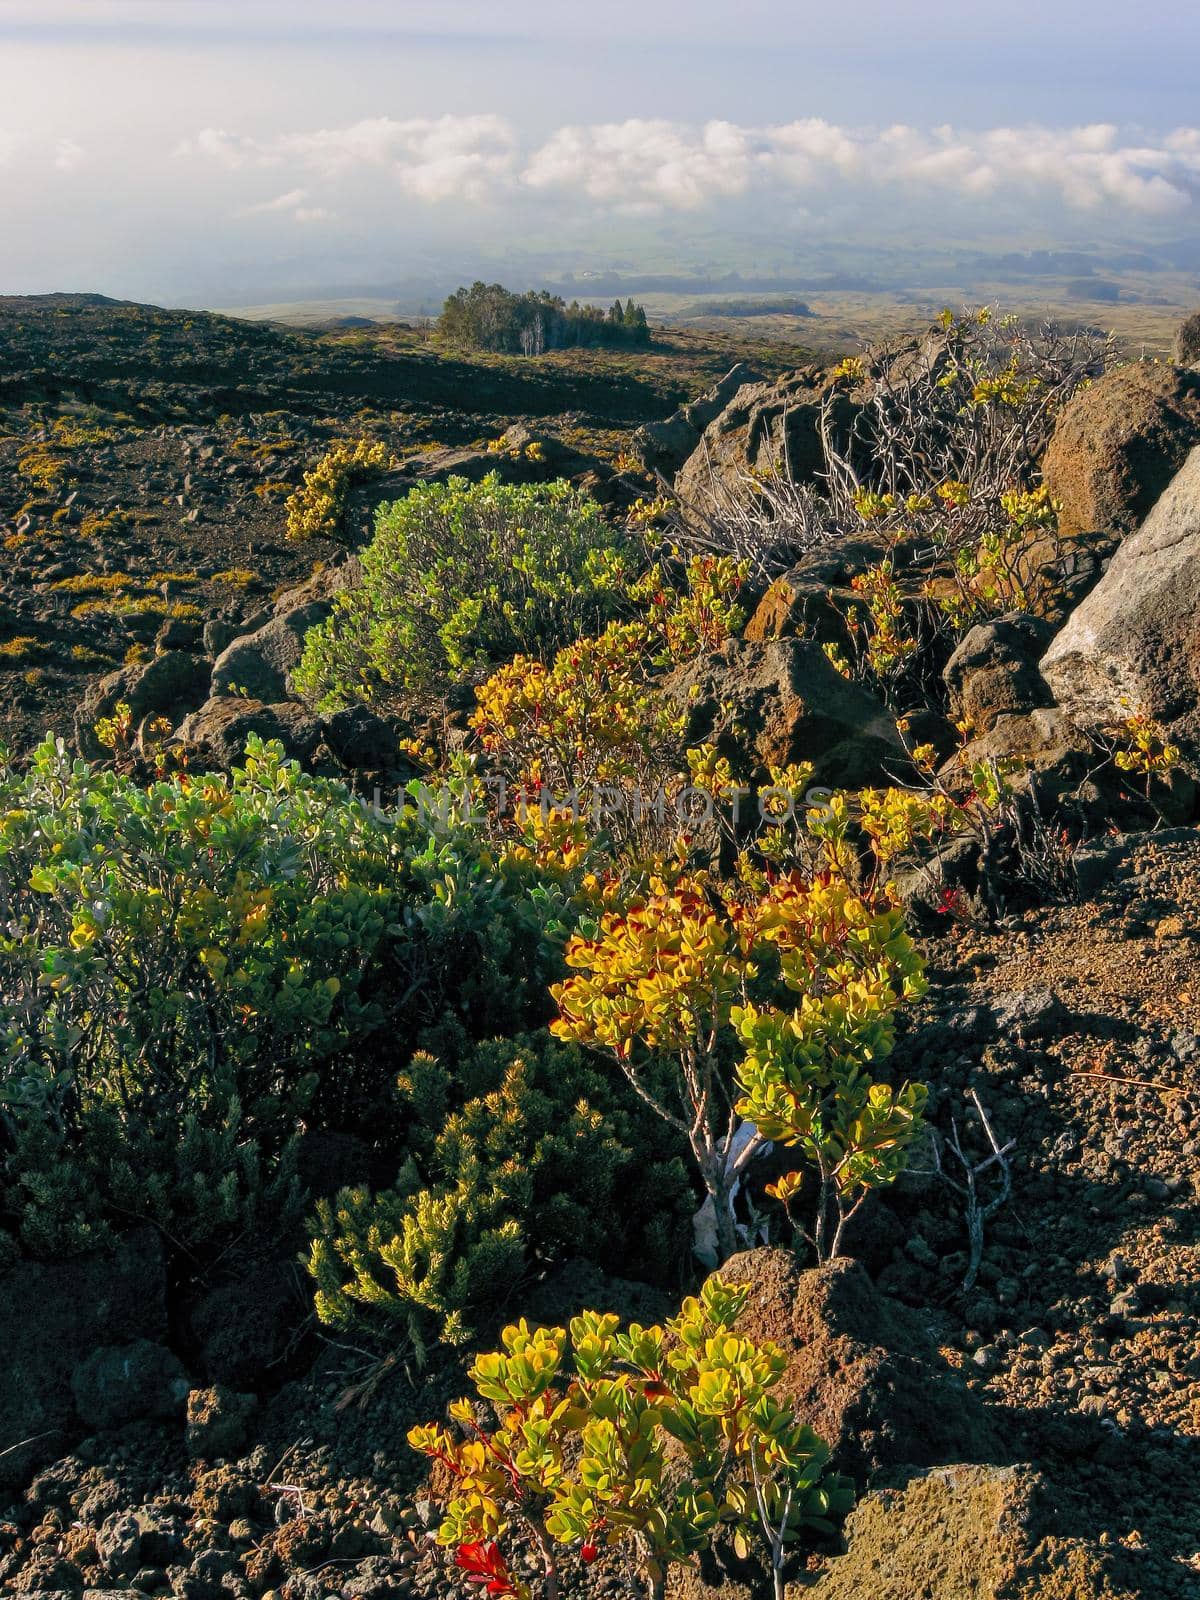 Tropical Vegetation Growing Near the Summit of Haleakala National Park on Maui, Hawaii by markvandam